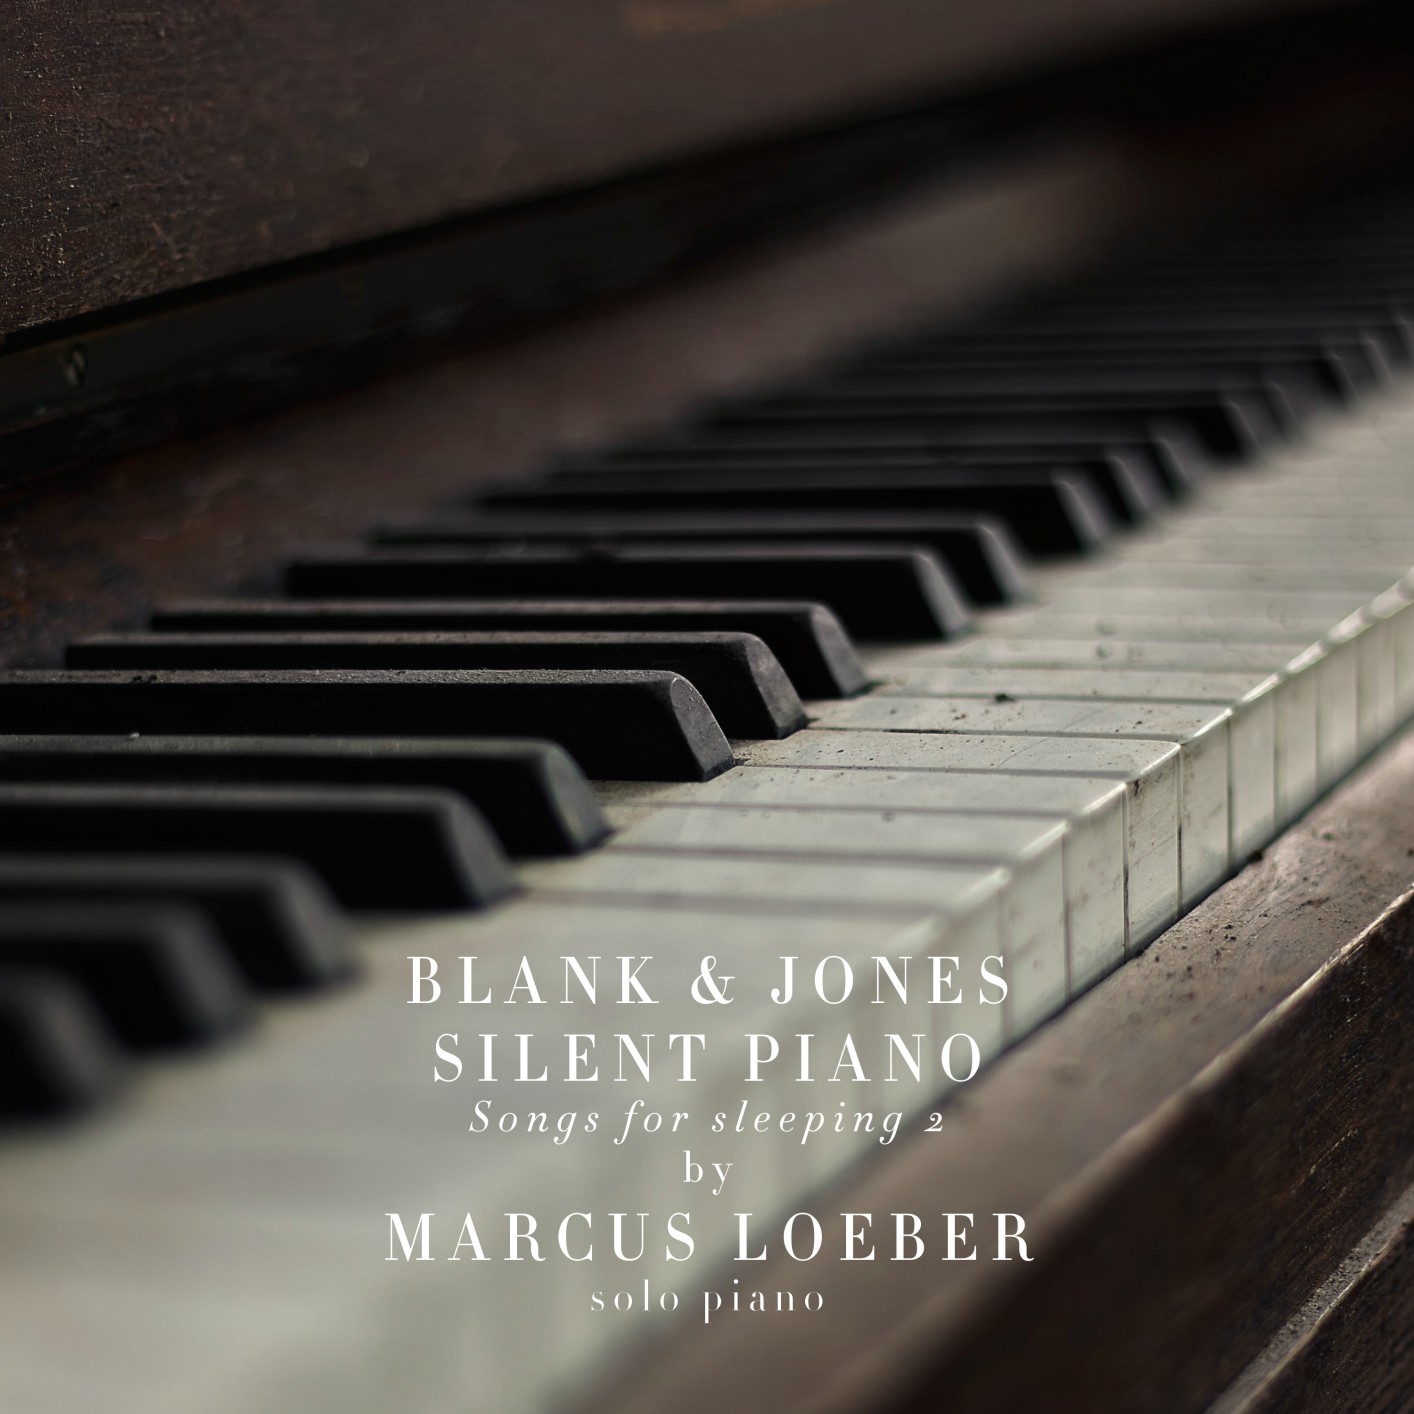 Blank & Jones, Marcus Loeber - Silent Piano (Songs for Sleeping) 2 (2018) [FLAC 24bit/96kHz]